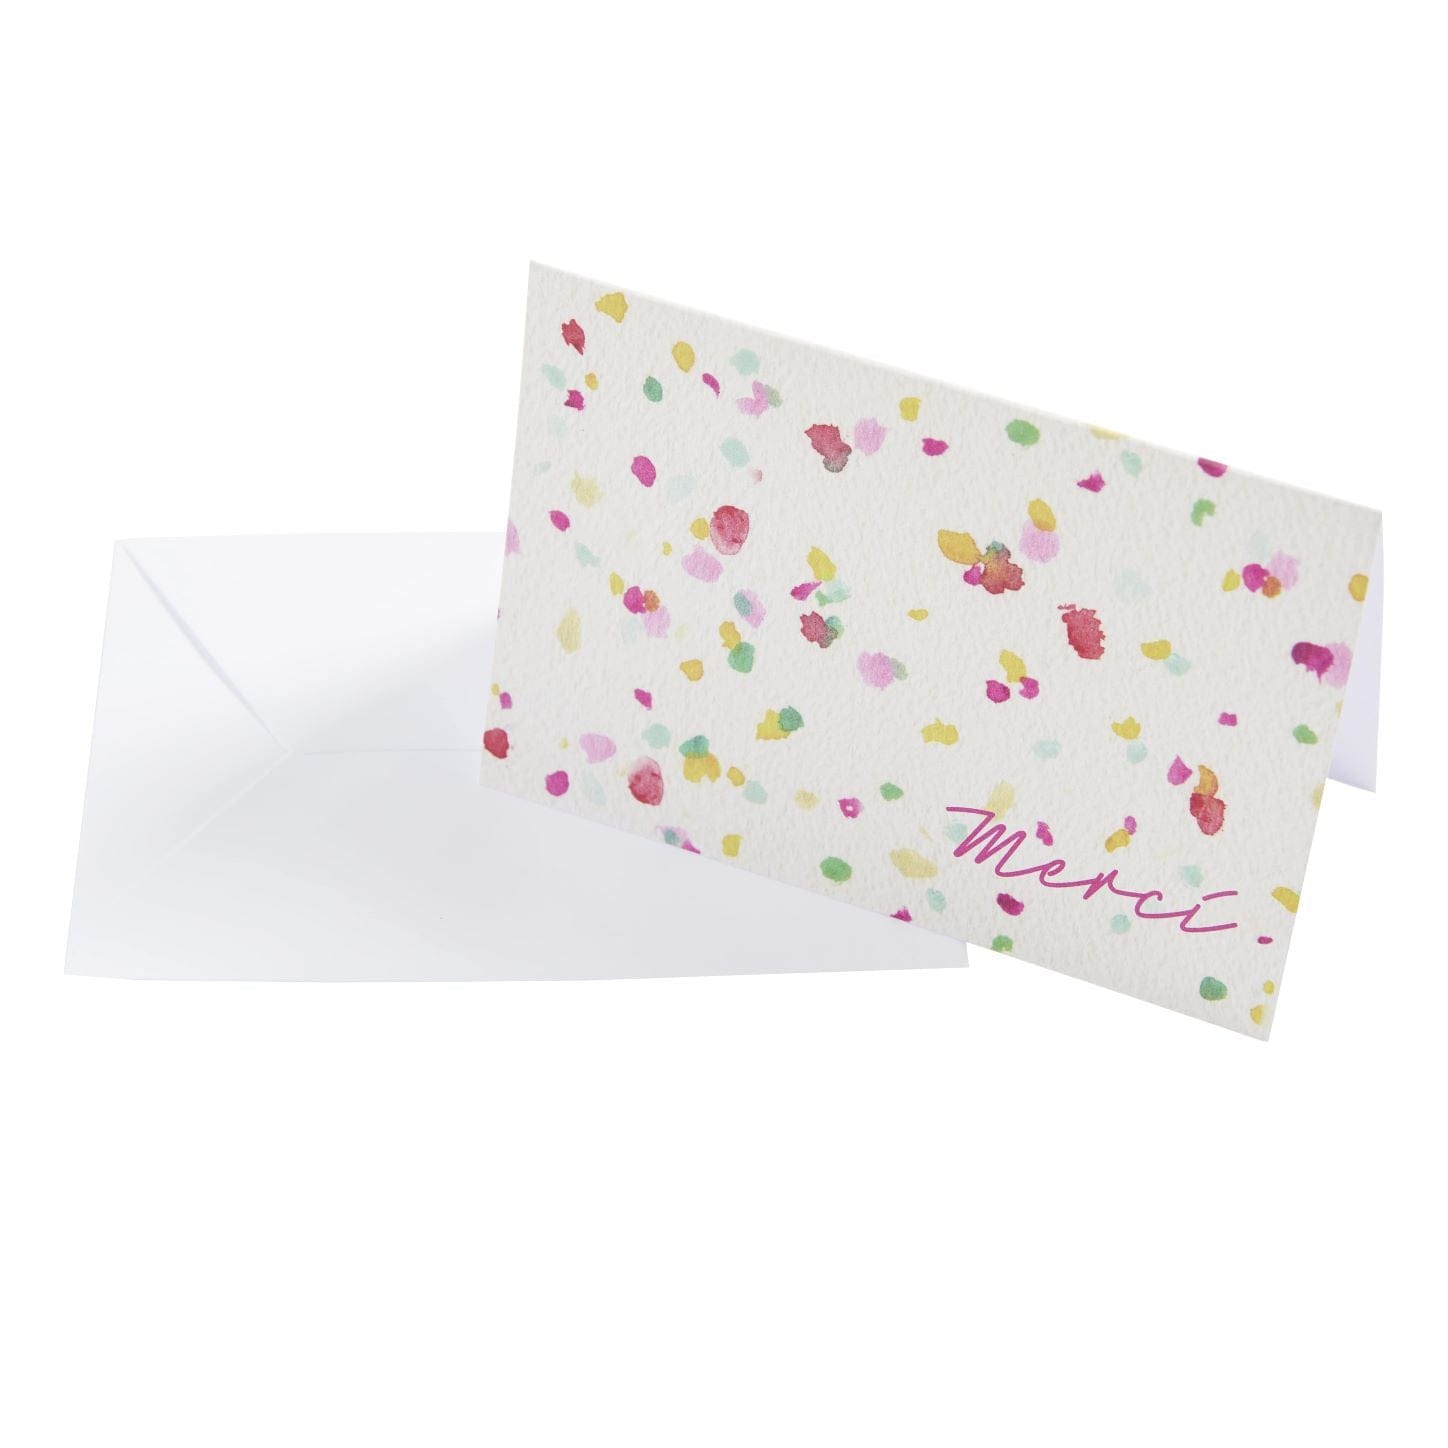 Confetti Merci Cards - 20 Count Gartner Studios Note Cards 94135